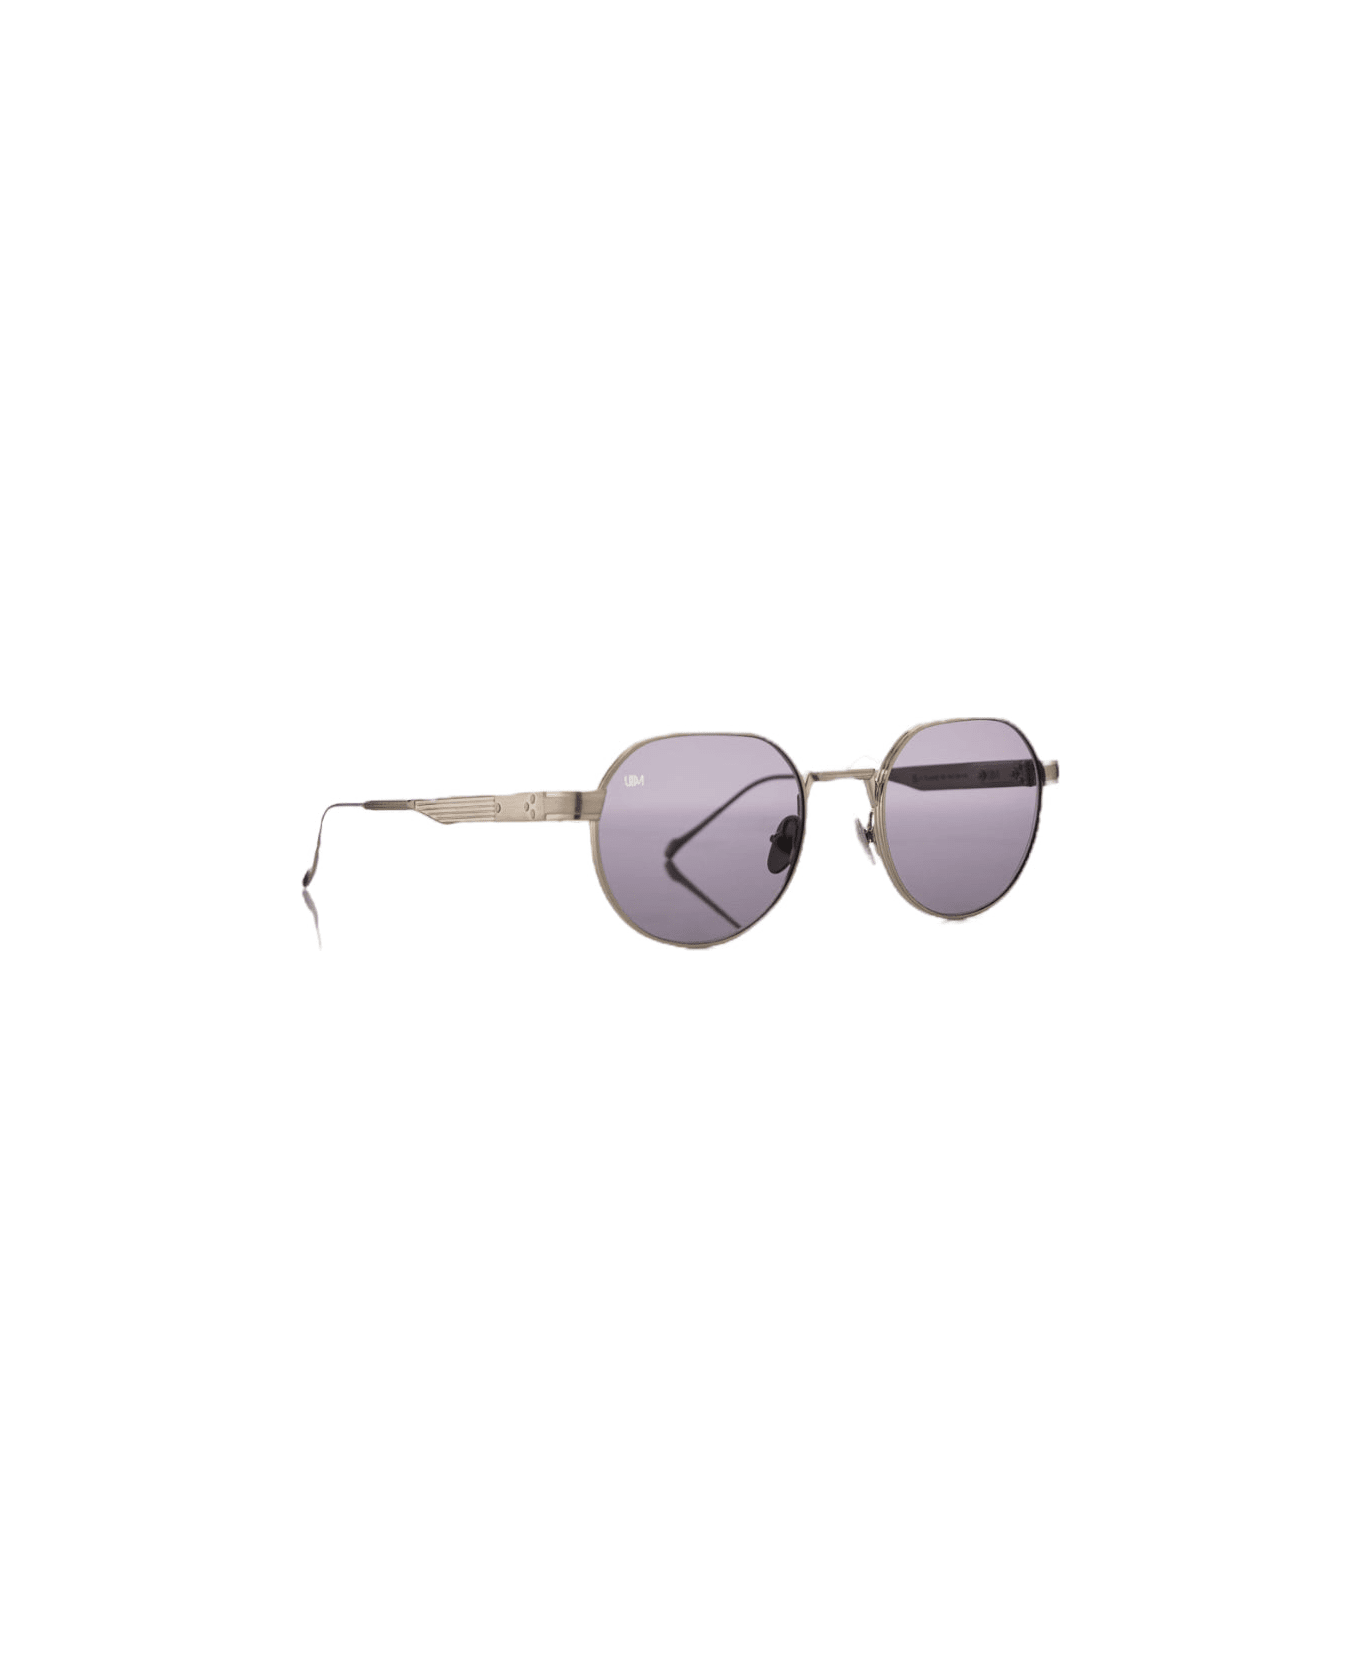 Brand Unique Claude - Silver Sunglasses サングラス